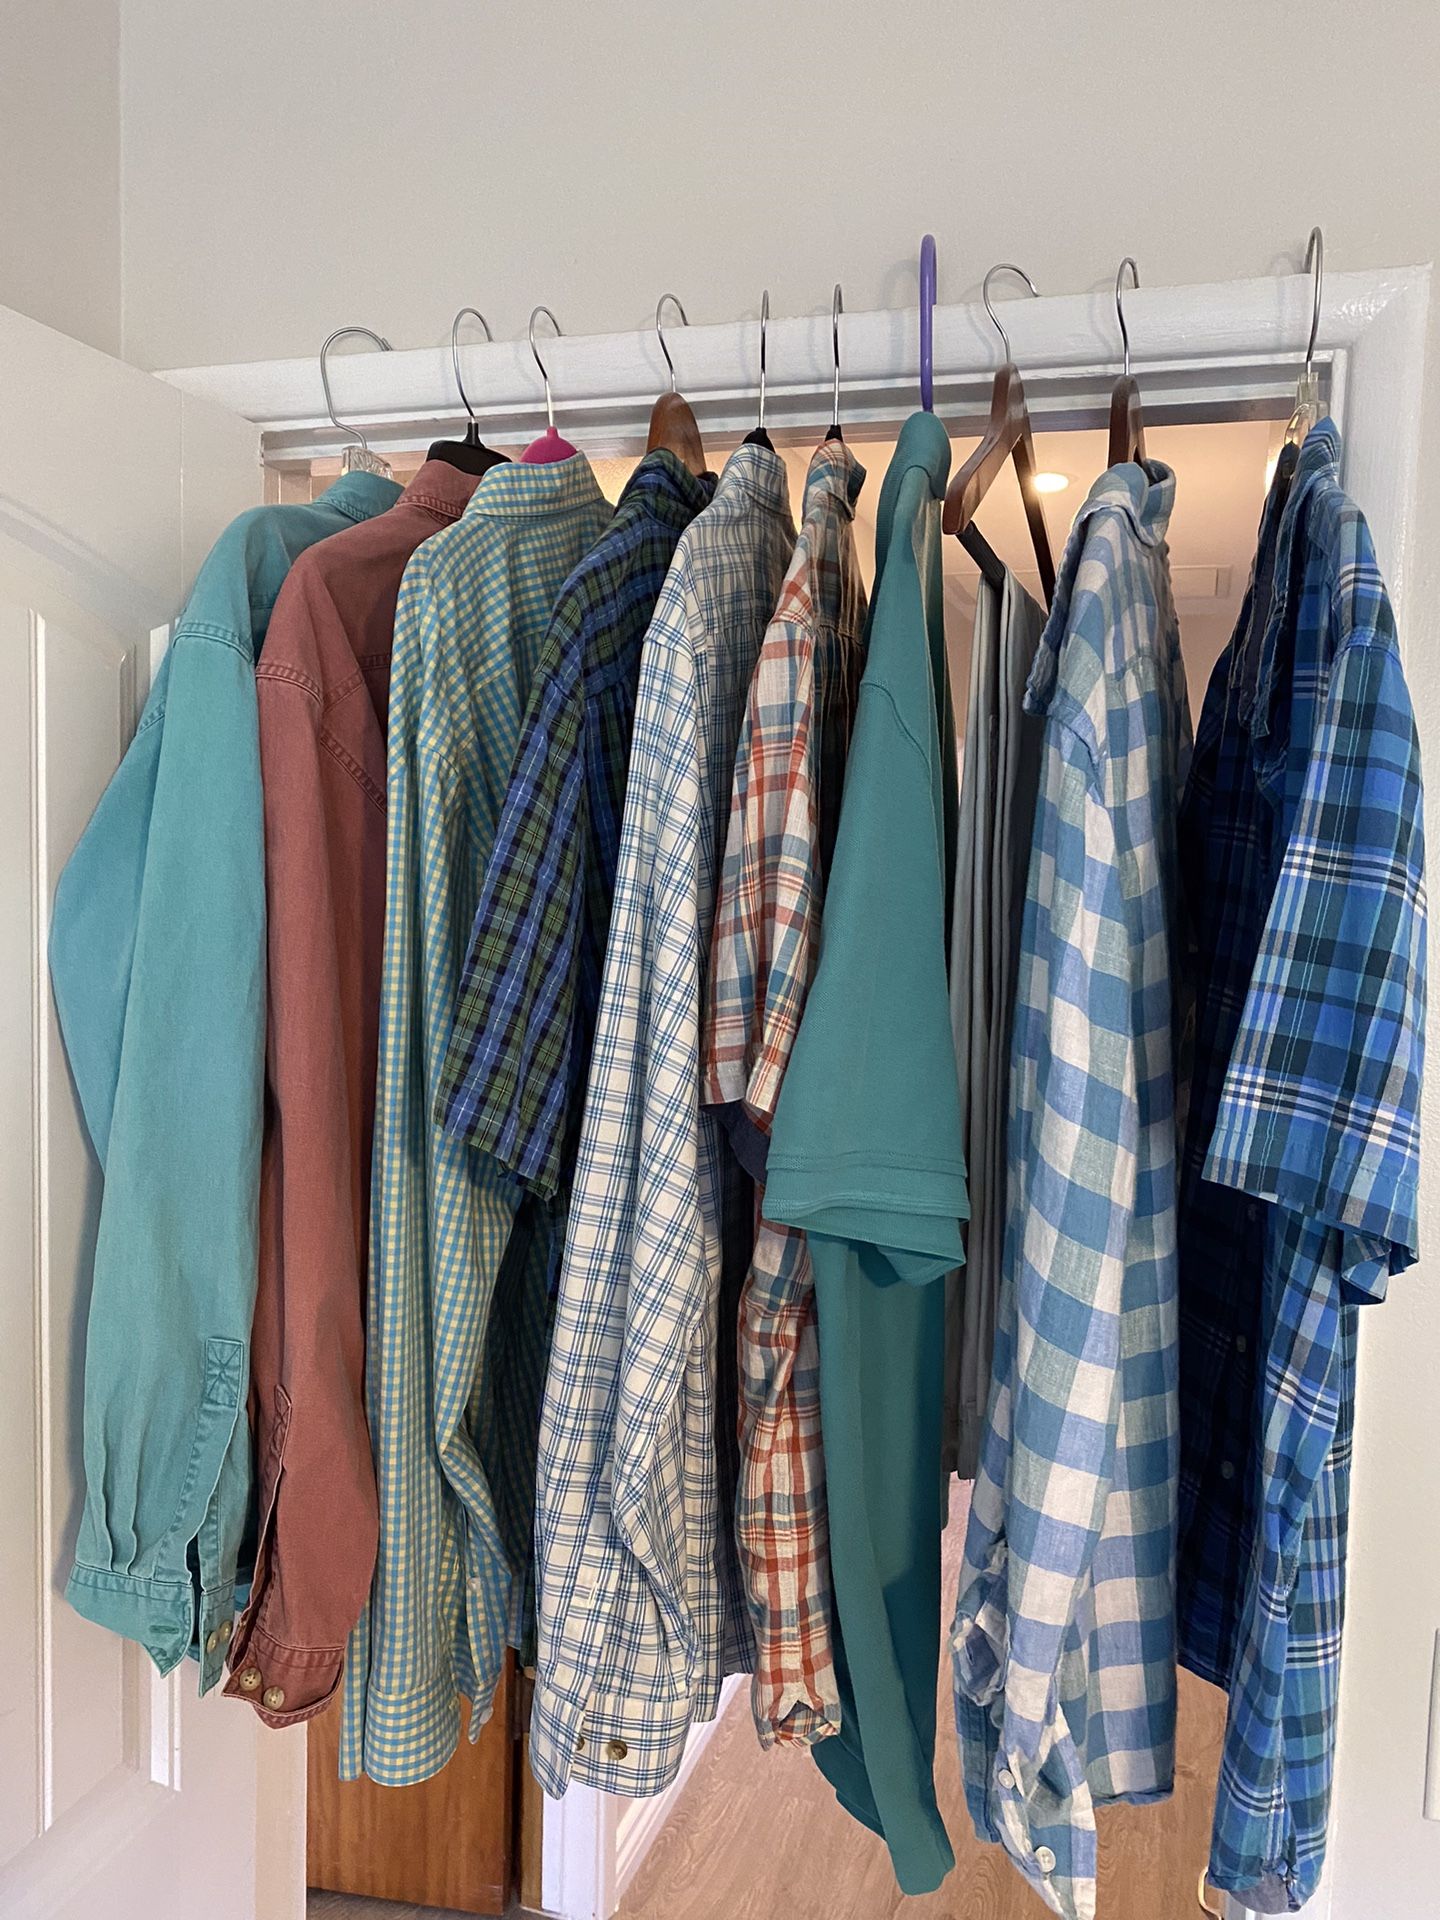 LL Bean Summer Wardrobe - Men’s Shirts  & Pants - Size Large To X-Large - 9 Shirts $49